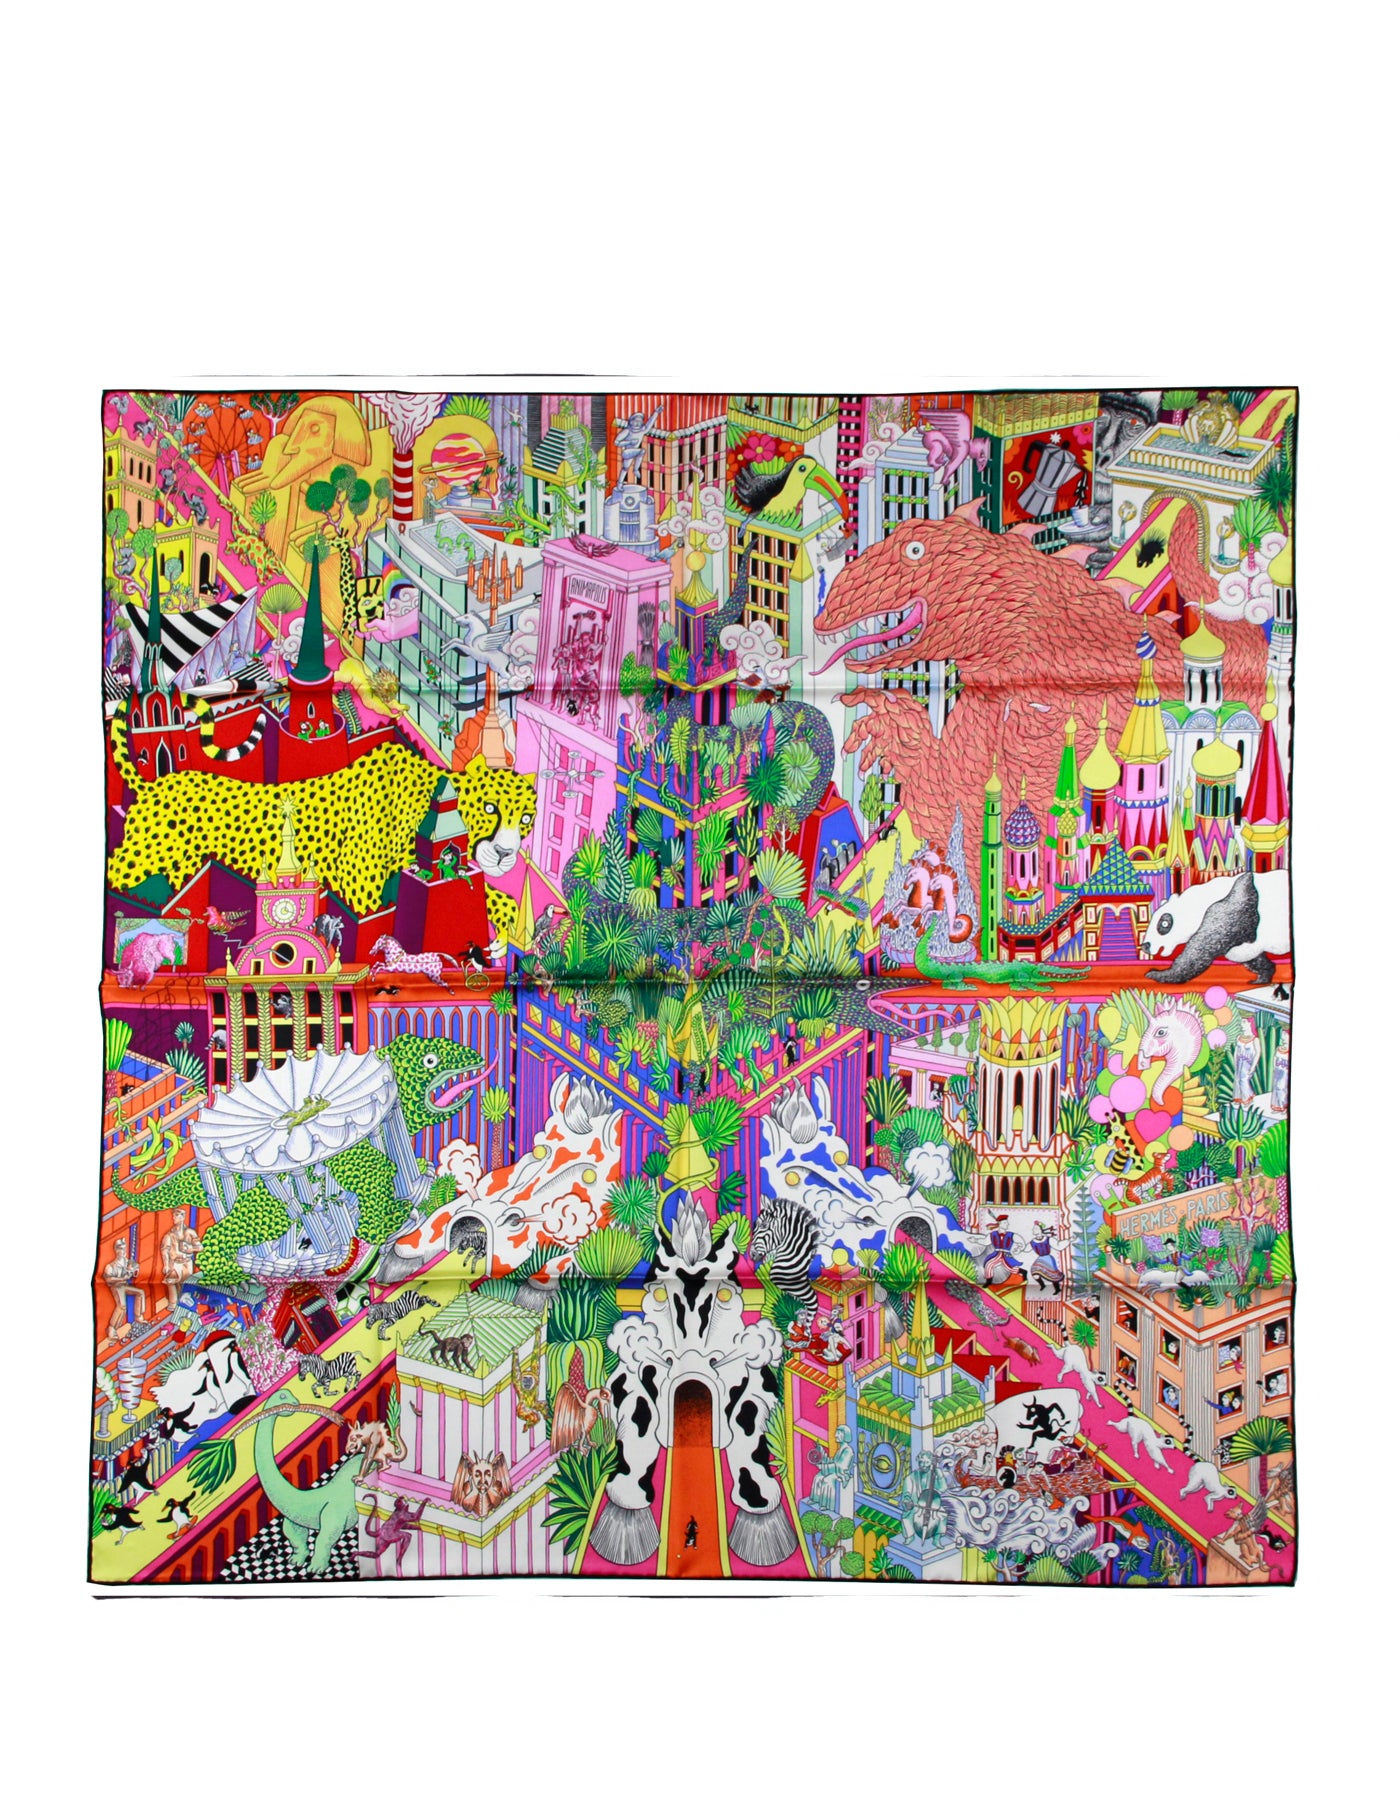 Hermes NEW RARE Multicolor Animapolis 90cm Silk Scarf